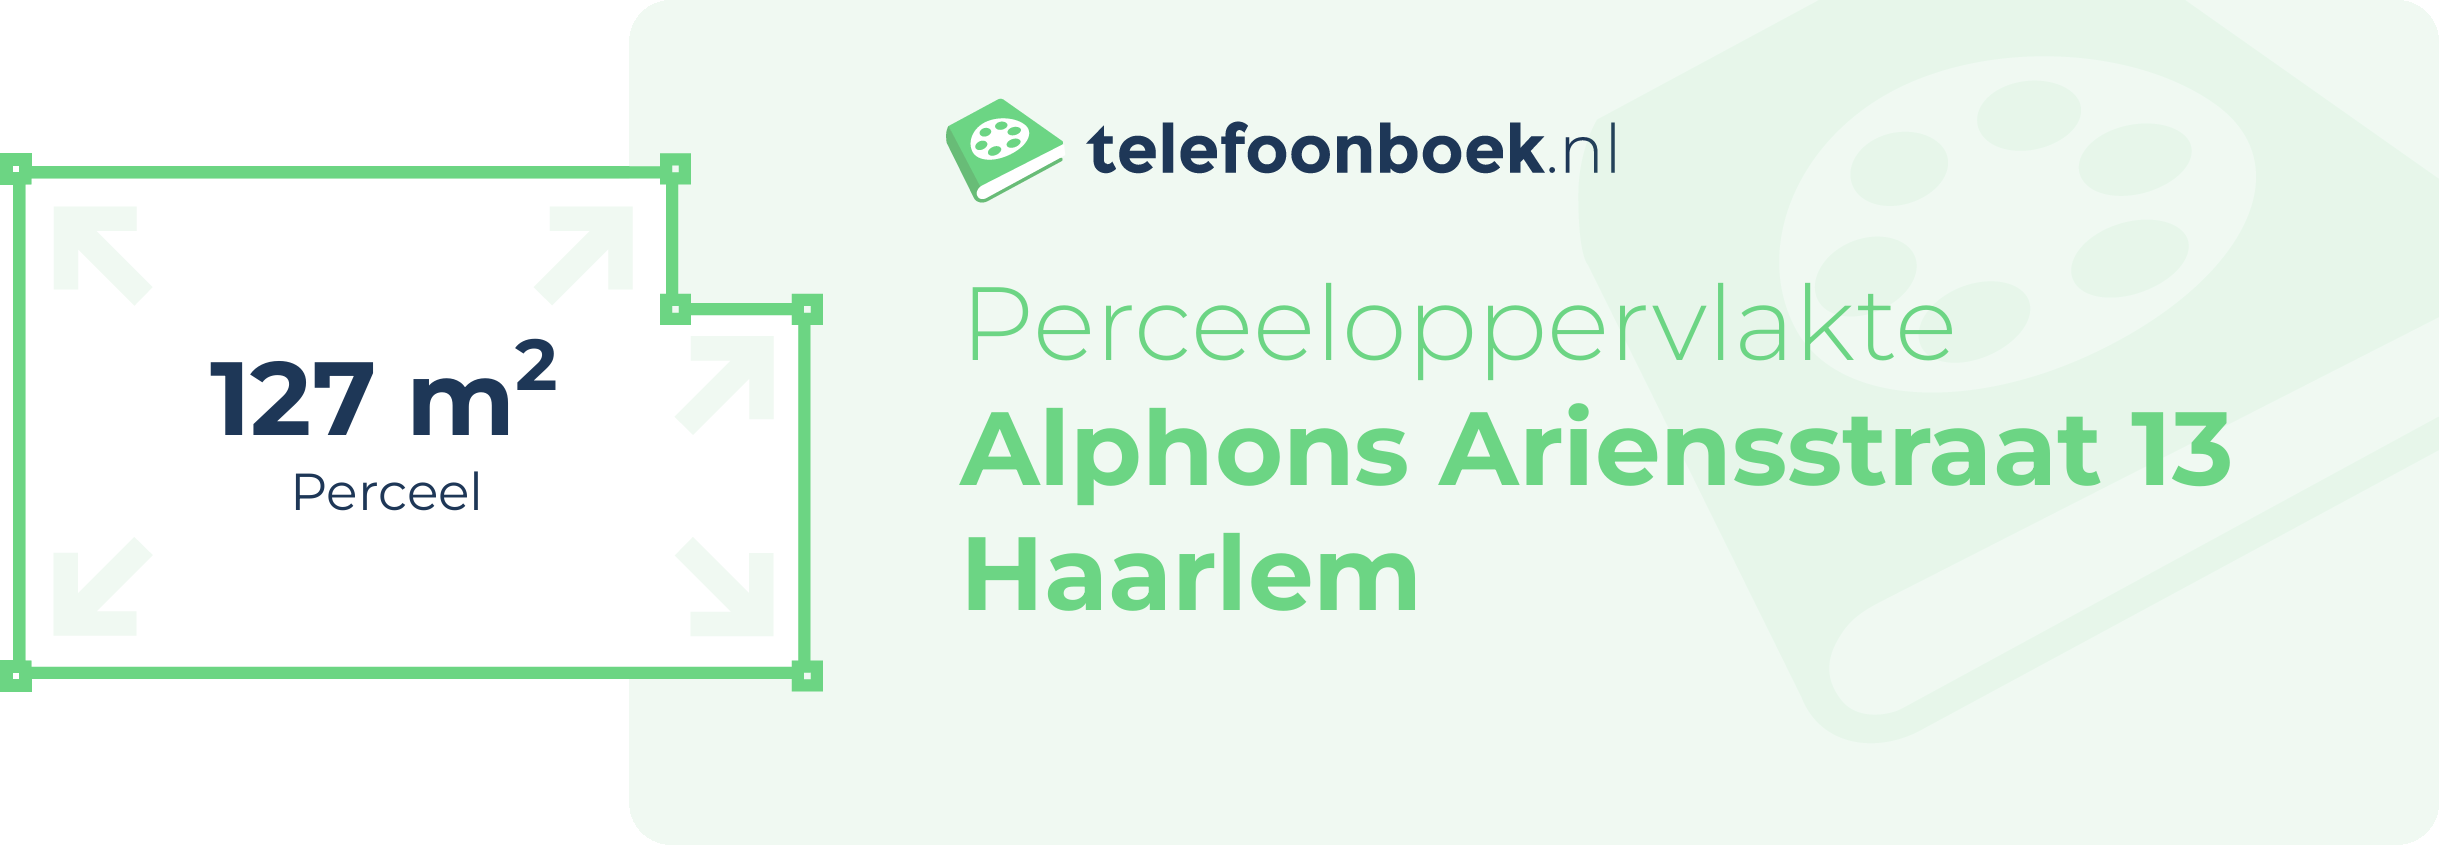 Perceeloppervlakte Alphons Ariensstraat 13 Haarlem